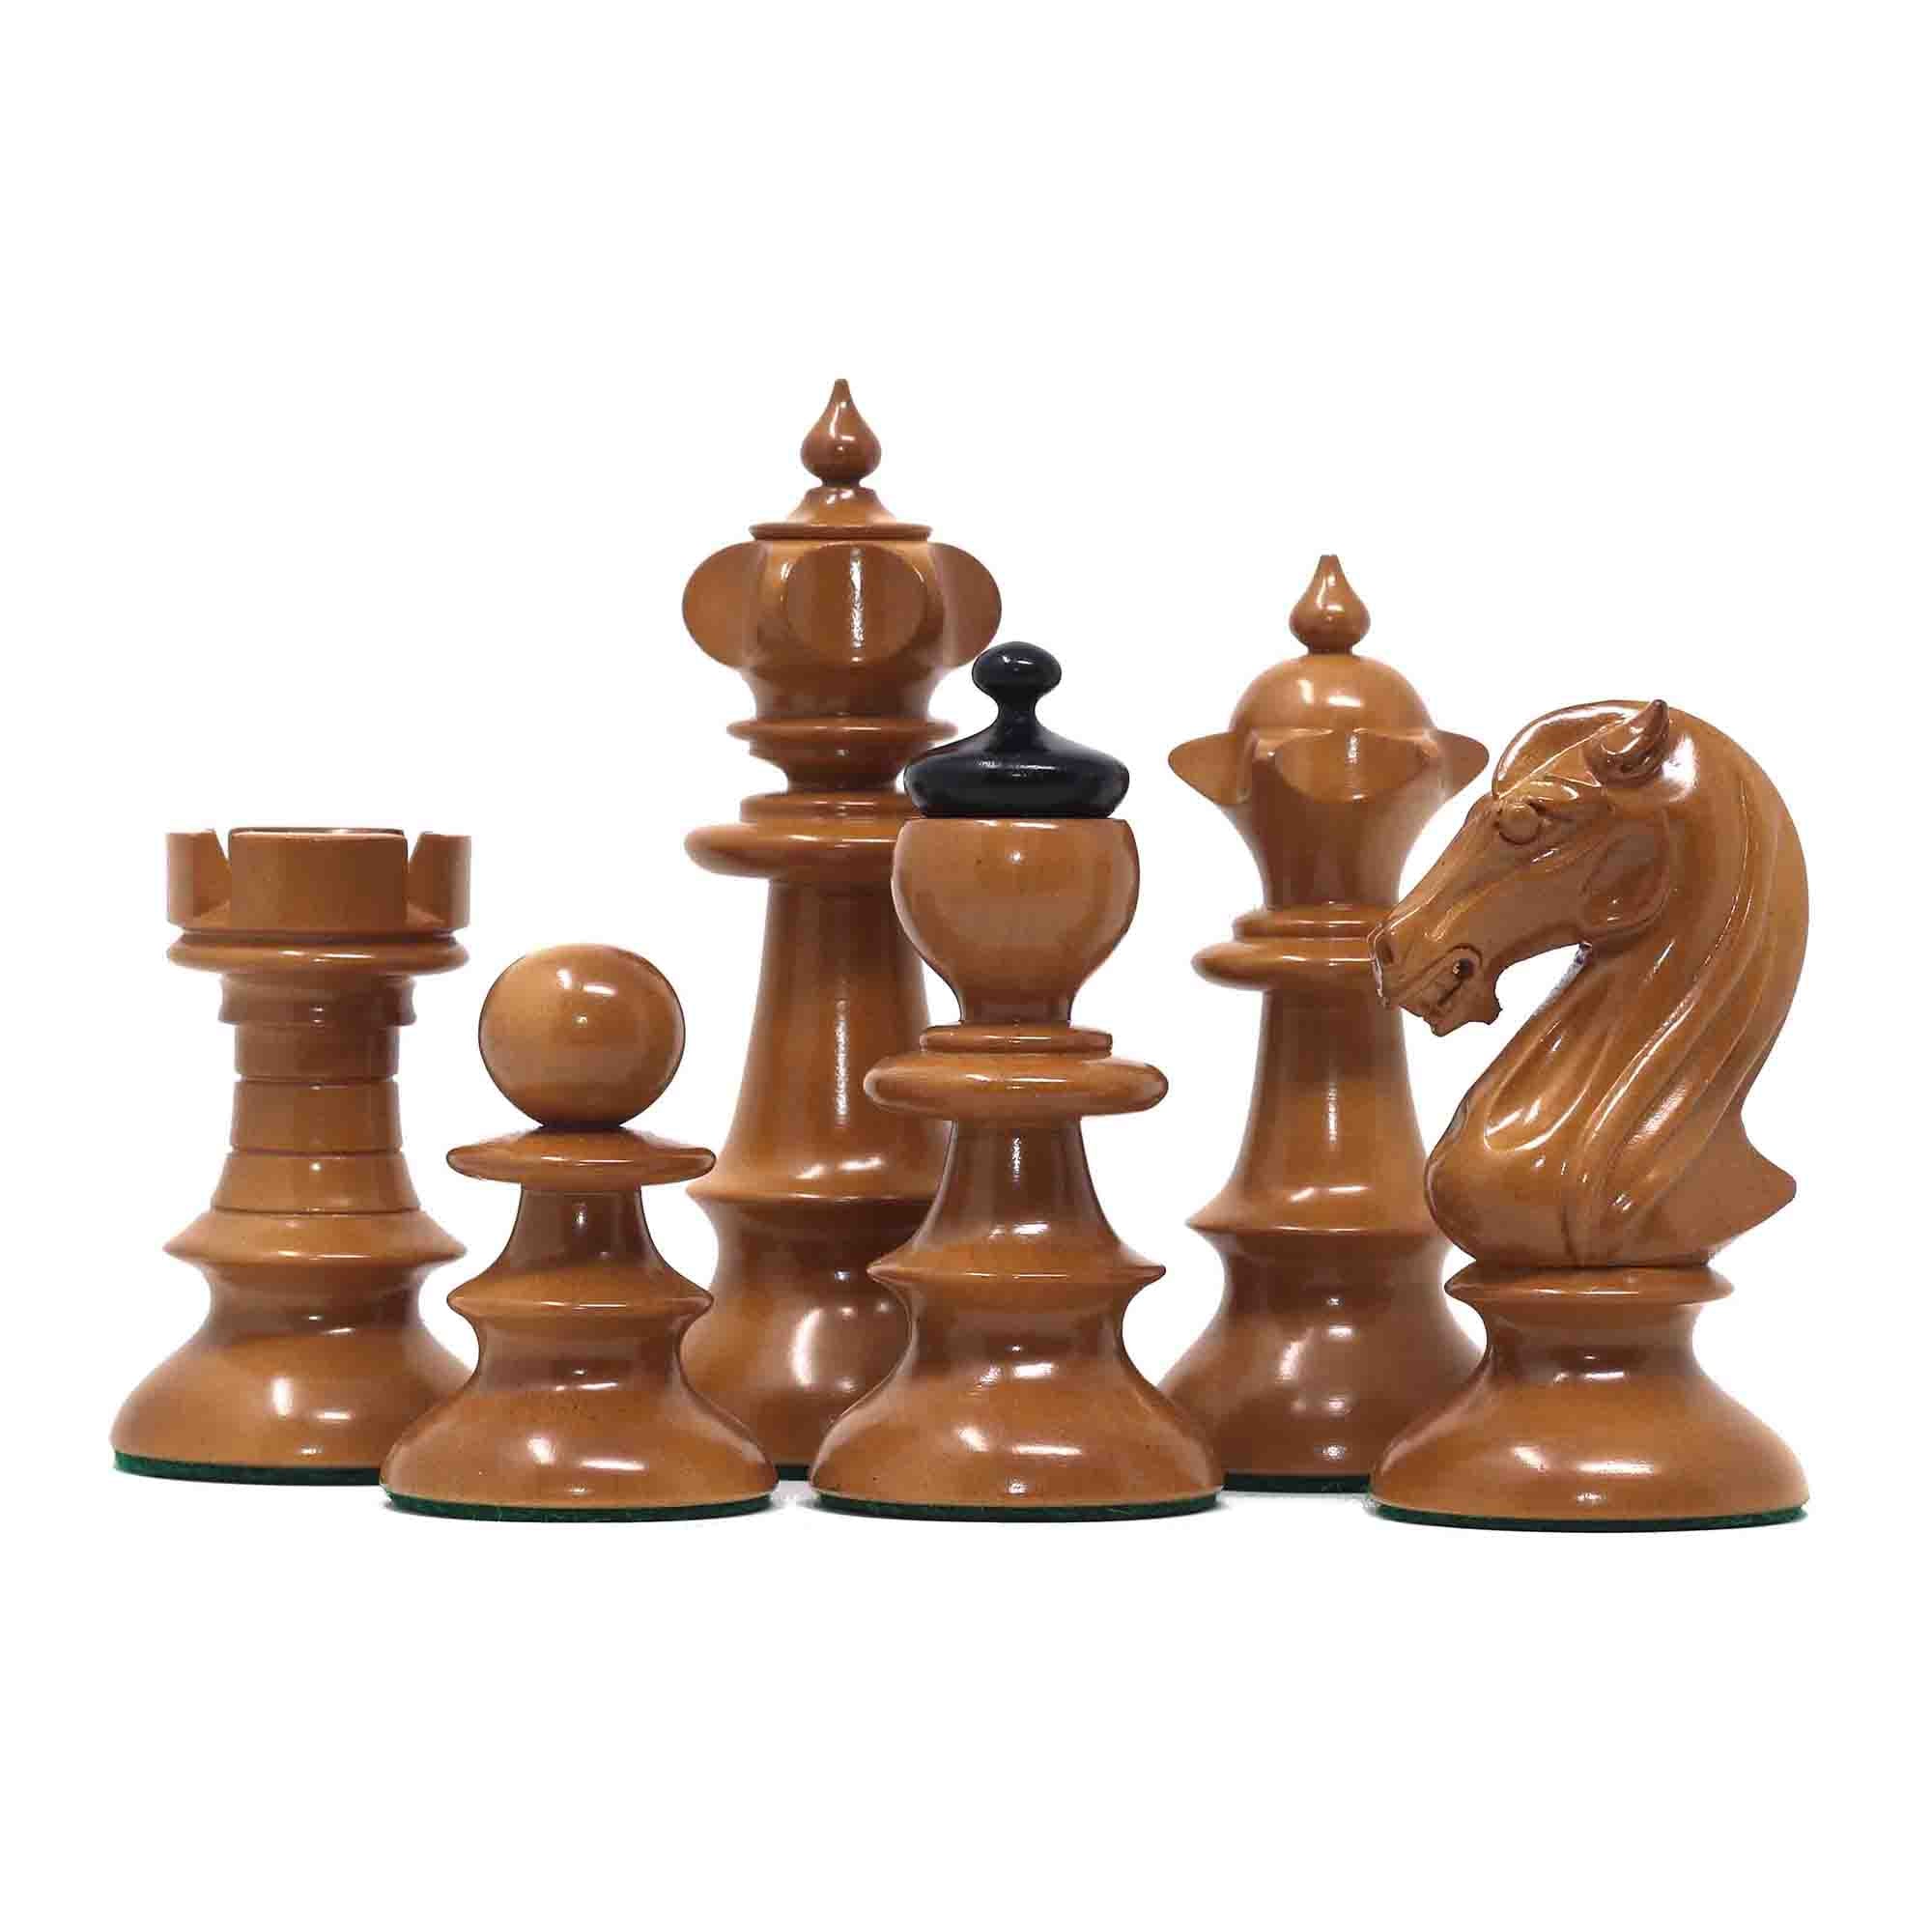 Vienna Coffee House Chess Set Ebony & Boxwood Pieces with Black & Ash Burl  Chess Board - 4 King